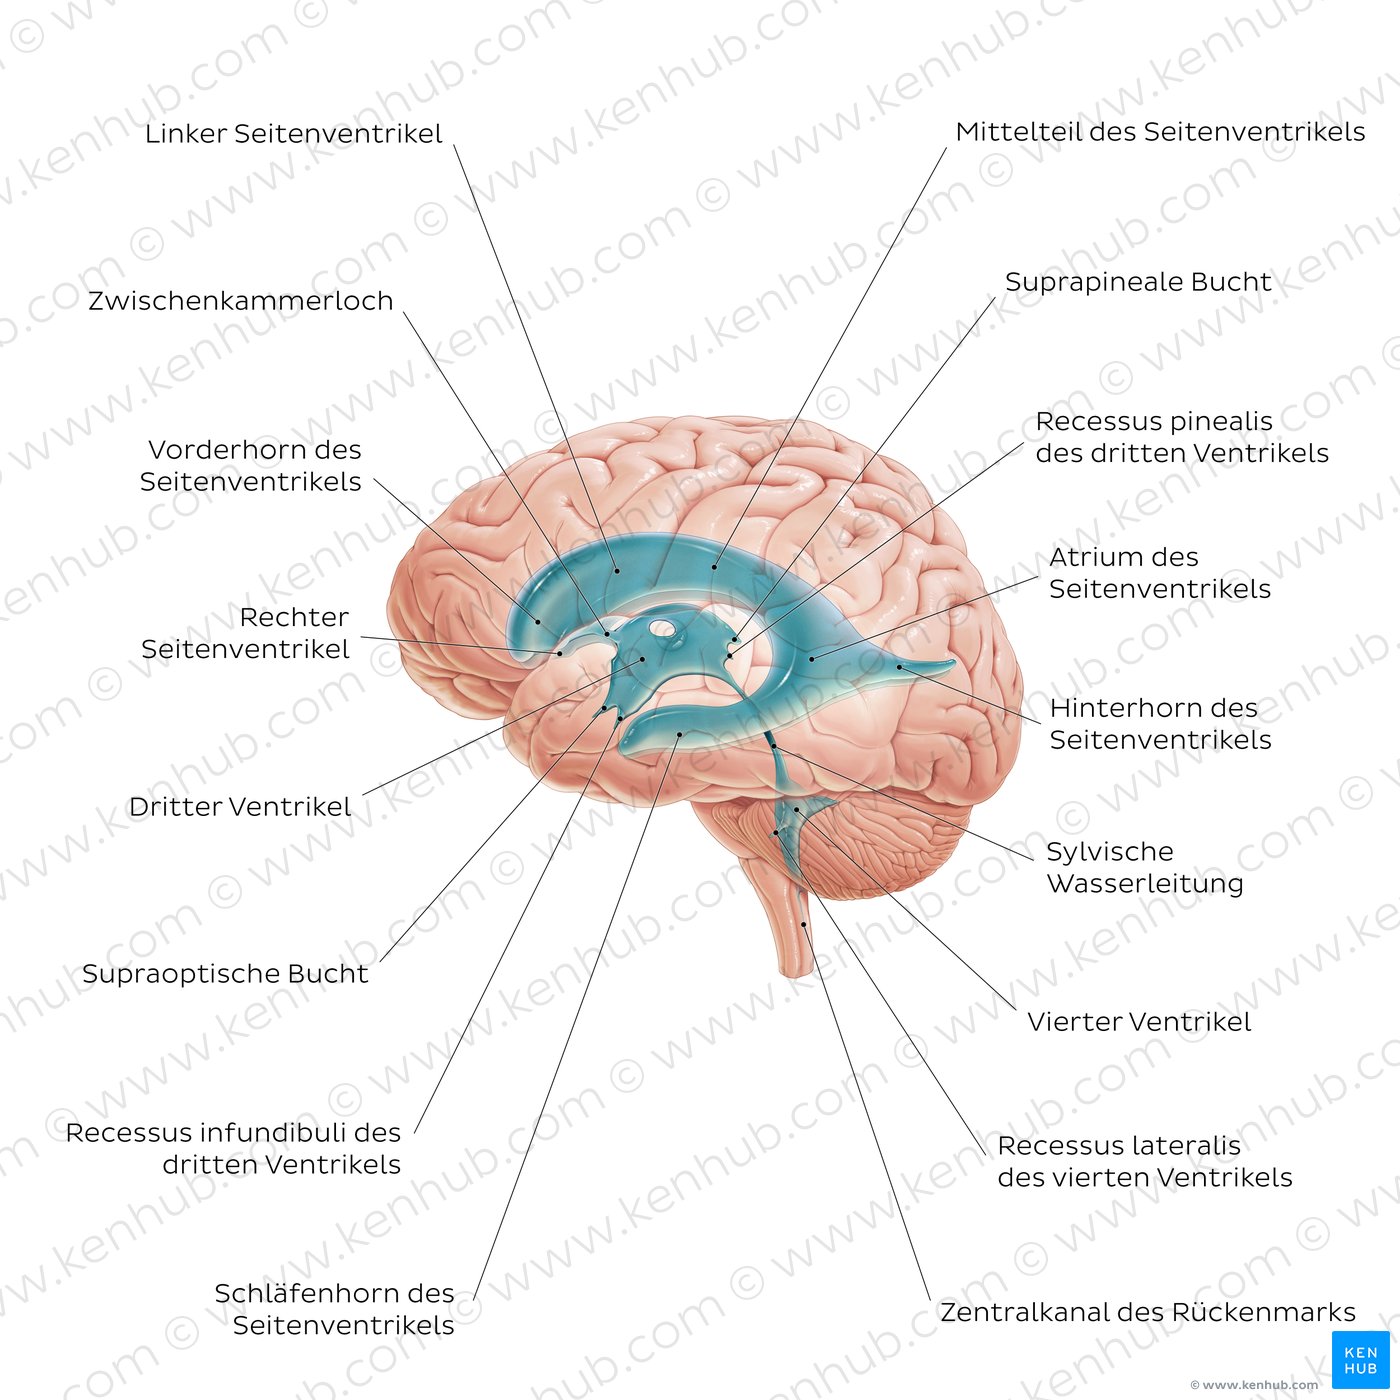 Ventrikelsystem des Gehirns